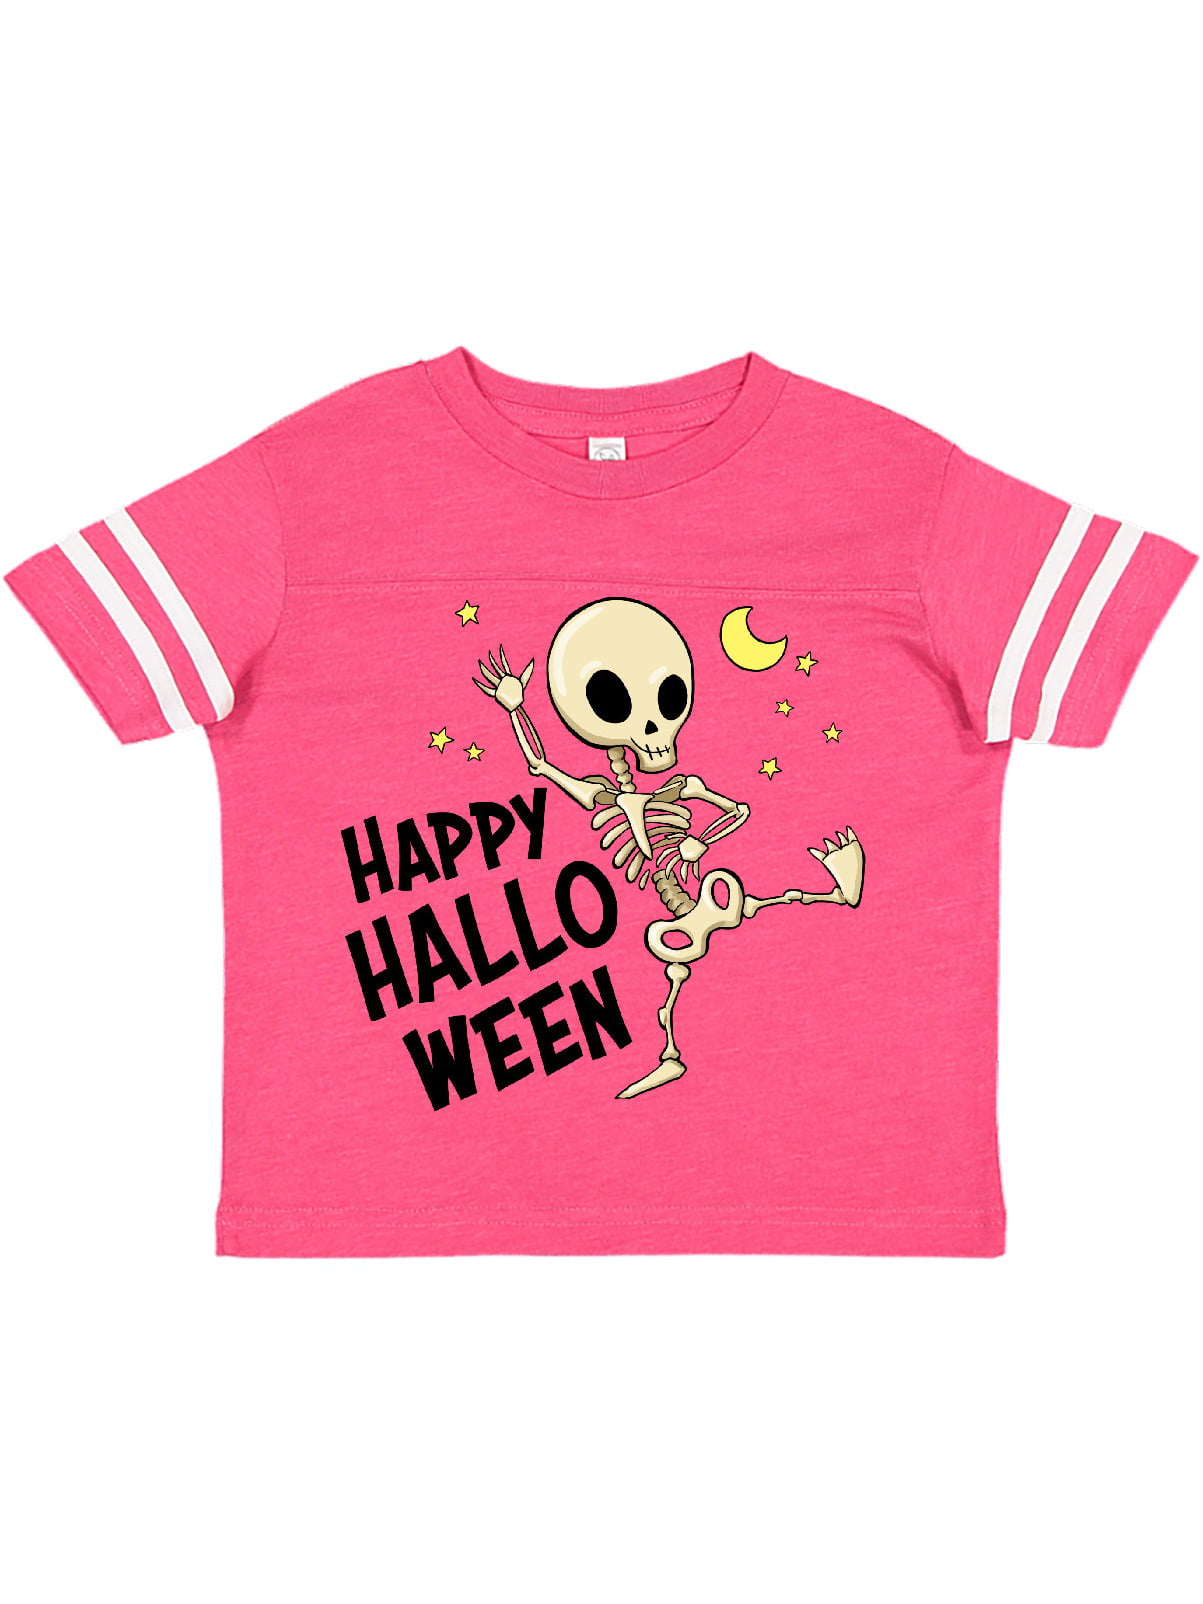 inktastic Happy Halloween with Dancing Skeleton Toddler T-Shirt